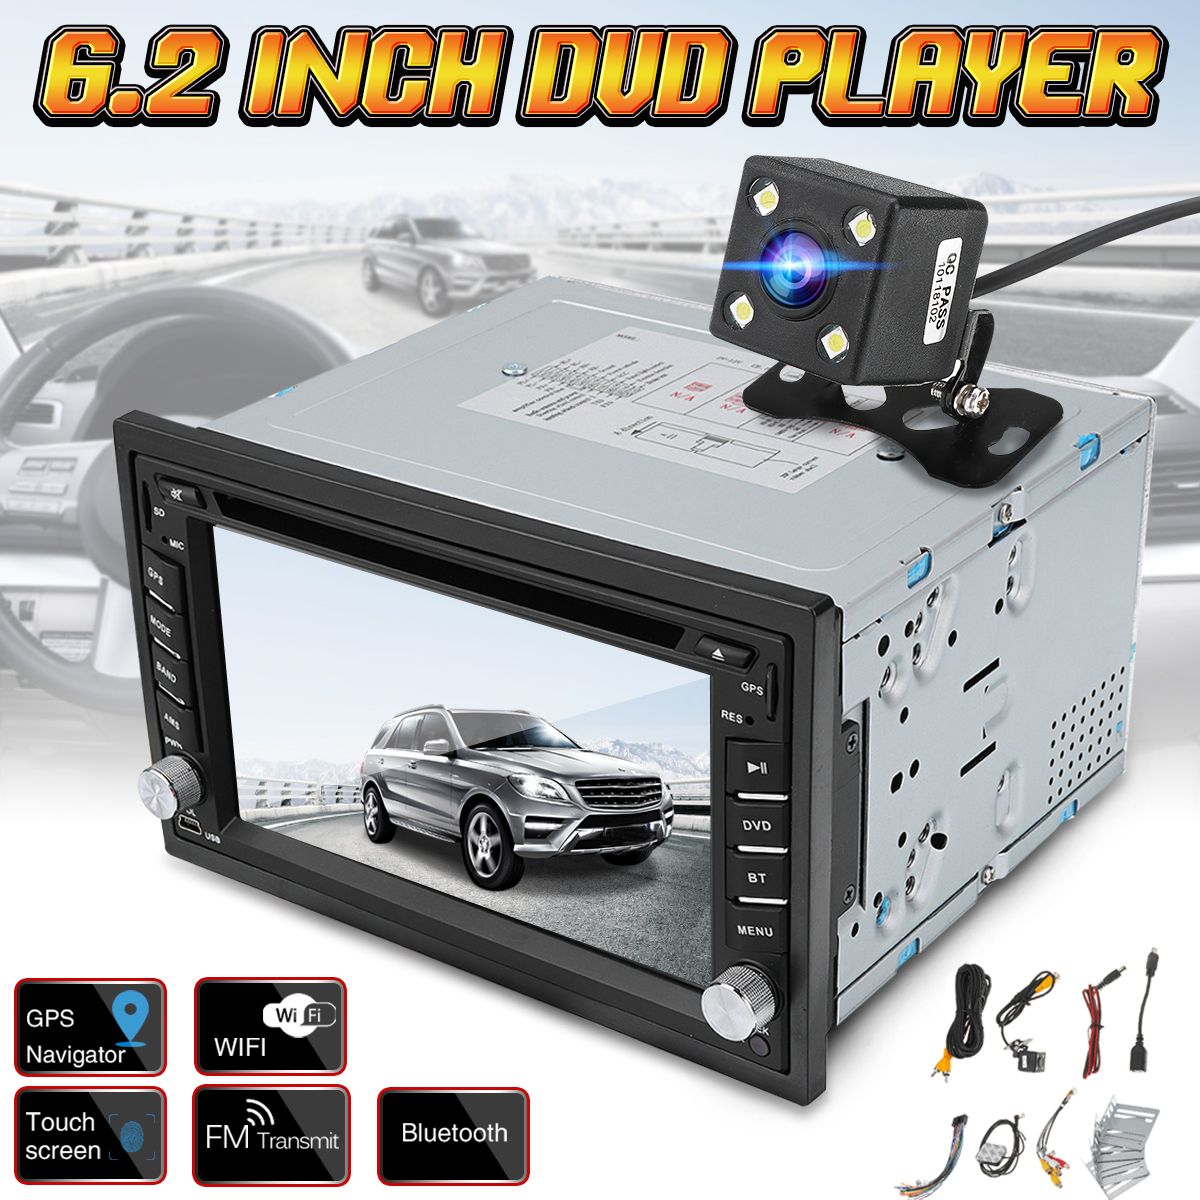 62-Inch-2-Din-Wince-Car-DVD-Player-FM-Radio-GPS-SAT-NAV-bluetooth-with-Rear-Camera-1402020